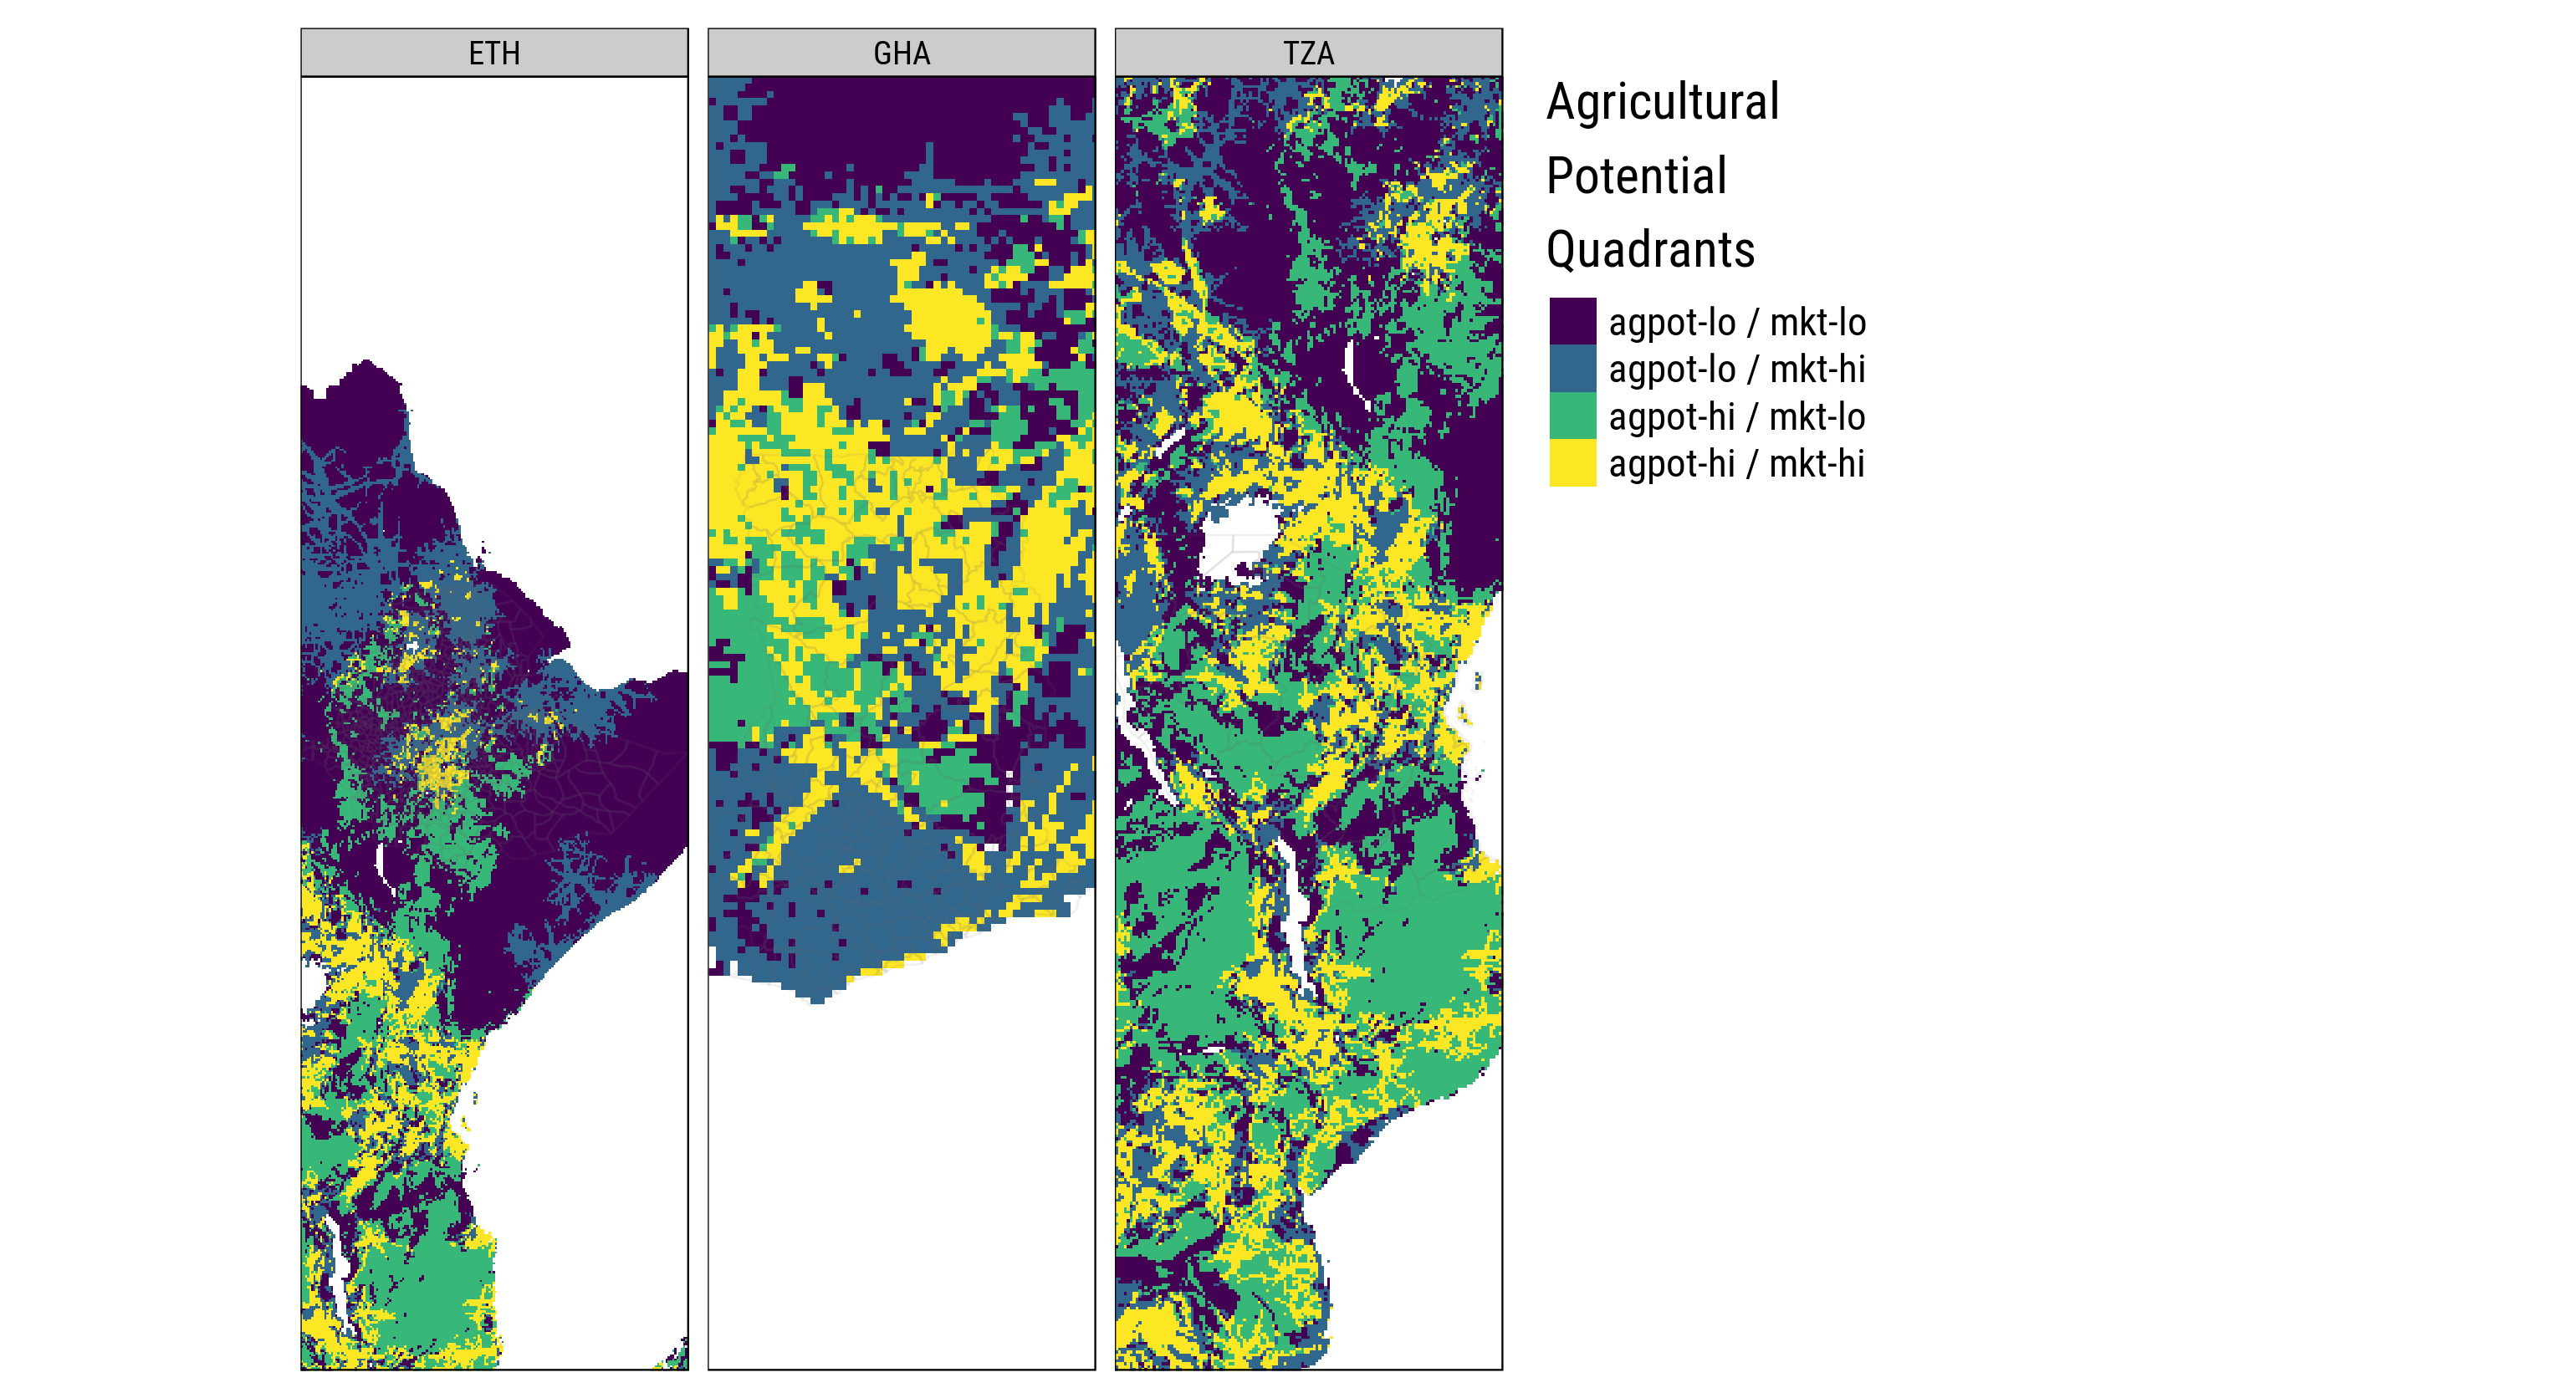 Low/High Agricultural Potential Quadrants